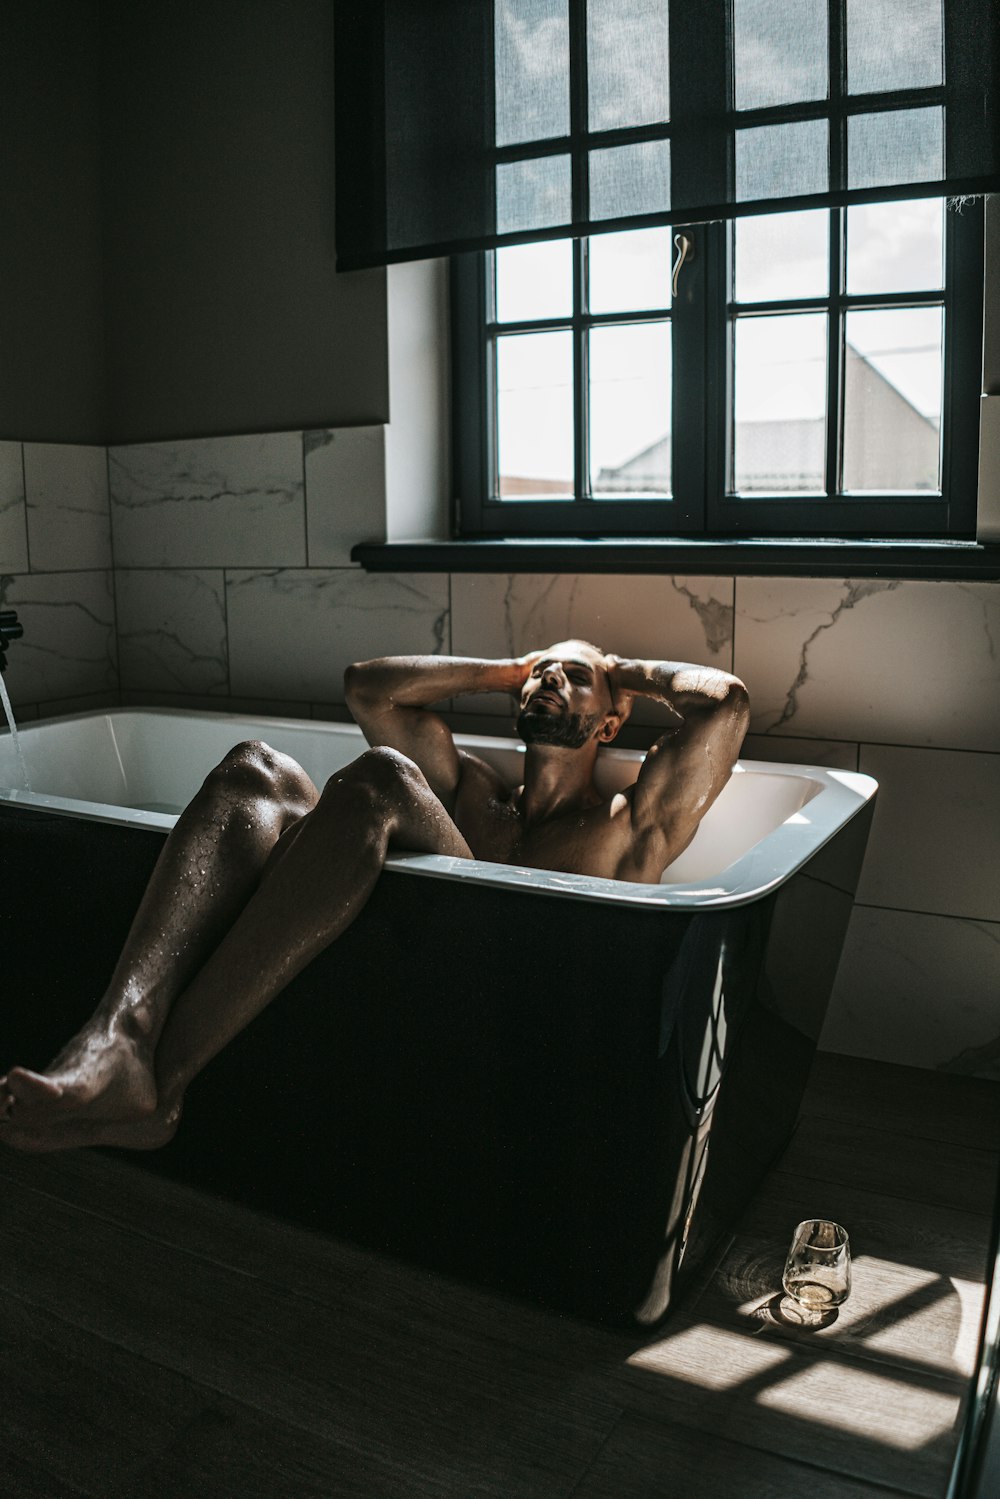 a naked man is sitting in a bathtub